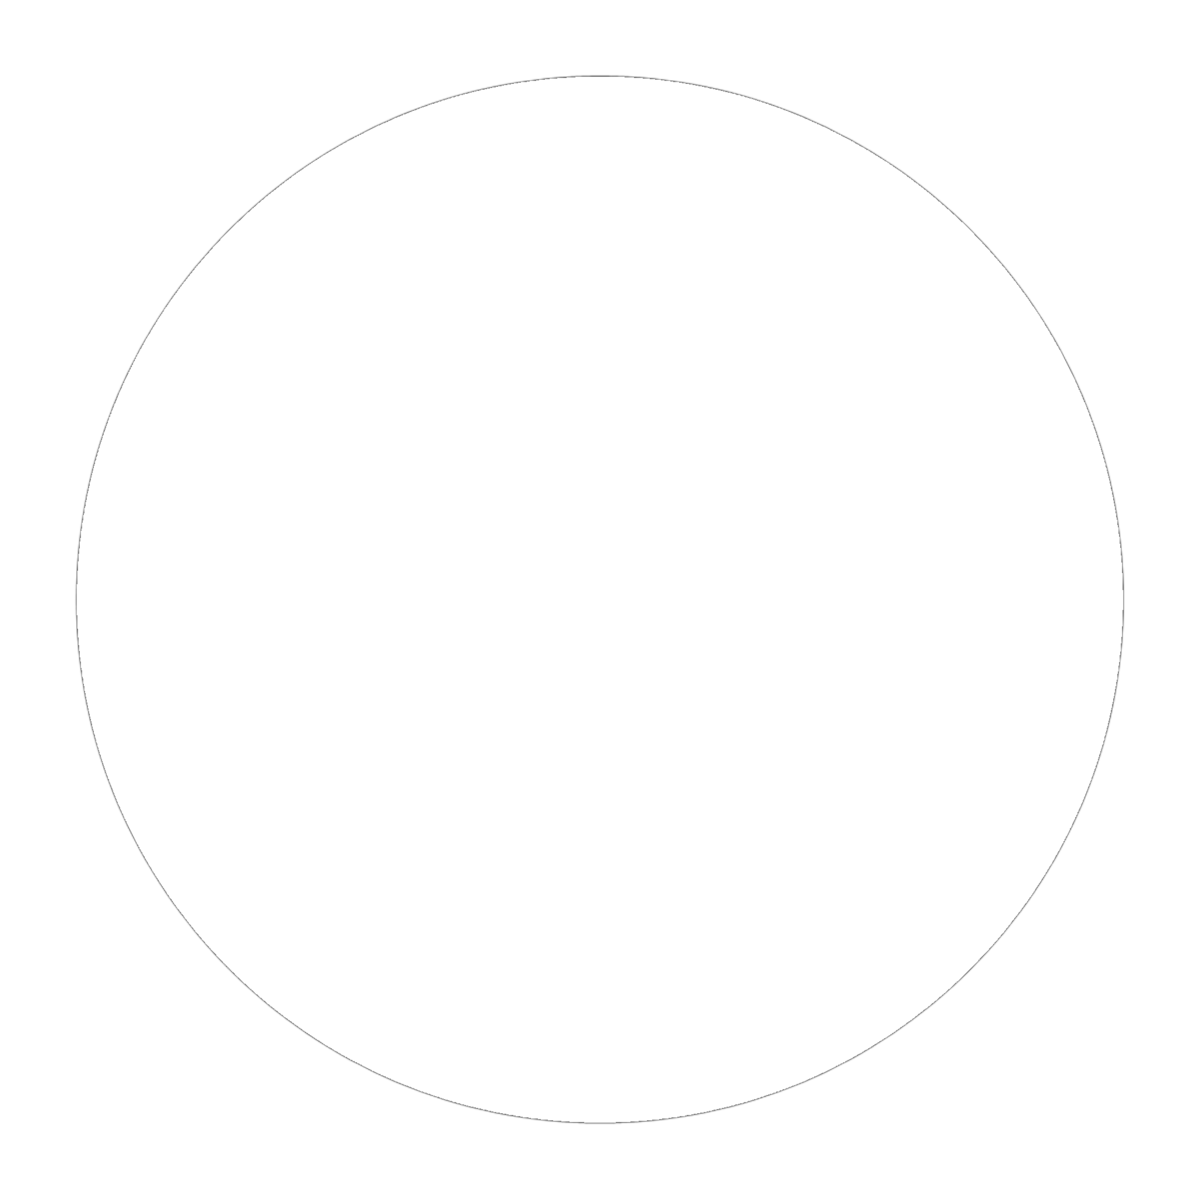 Steam logo or icon